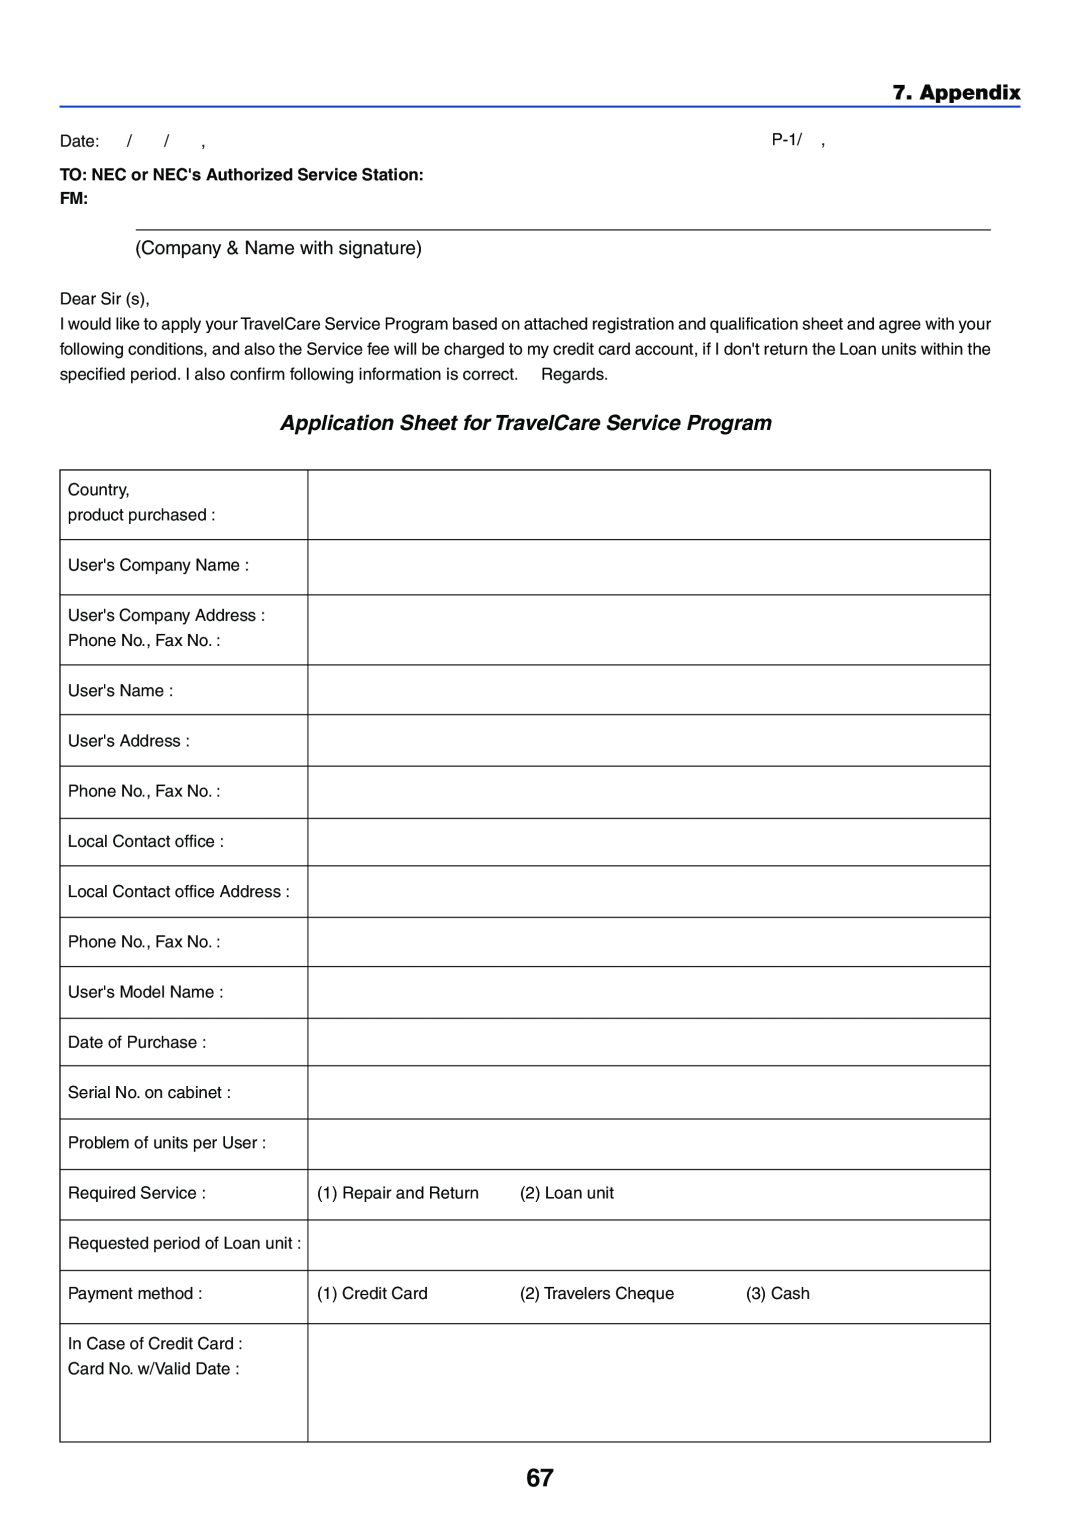 NEC VT37 manual Appendix, Application Sheet for TravelCare Service Program, Company & Name with signature 